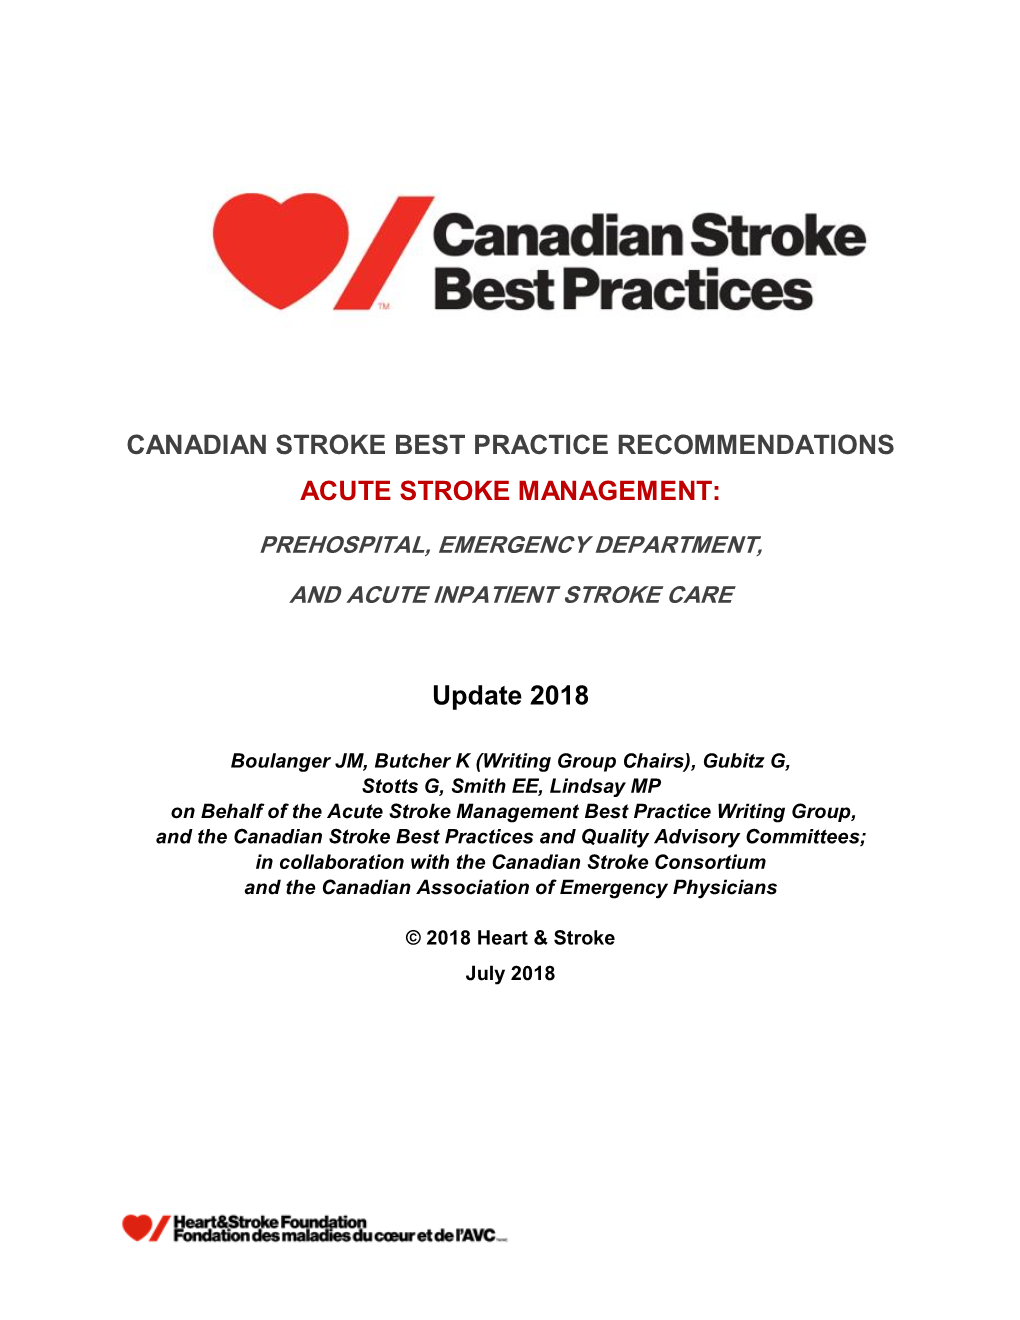 Acute Stroke Management